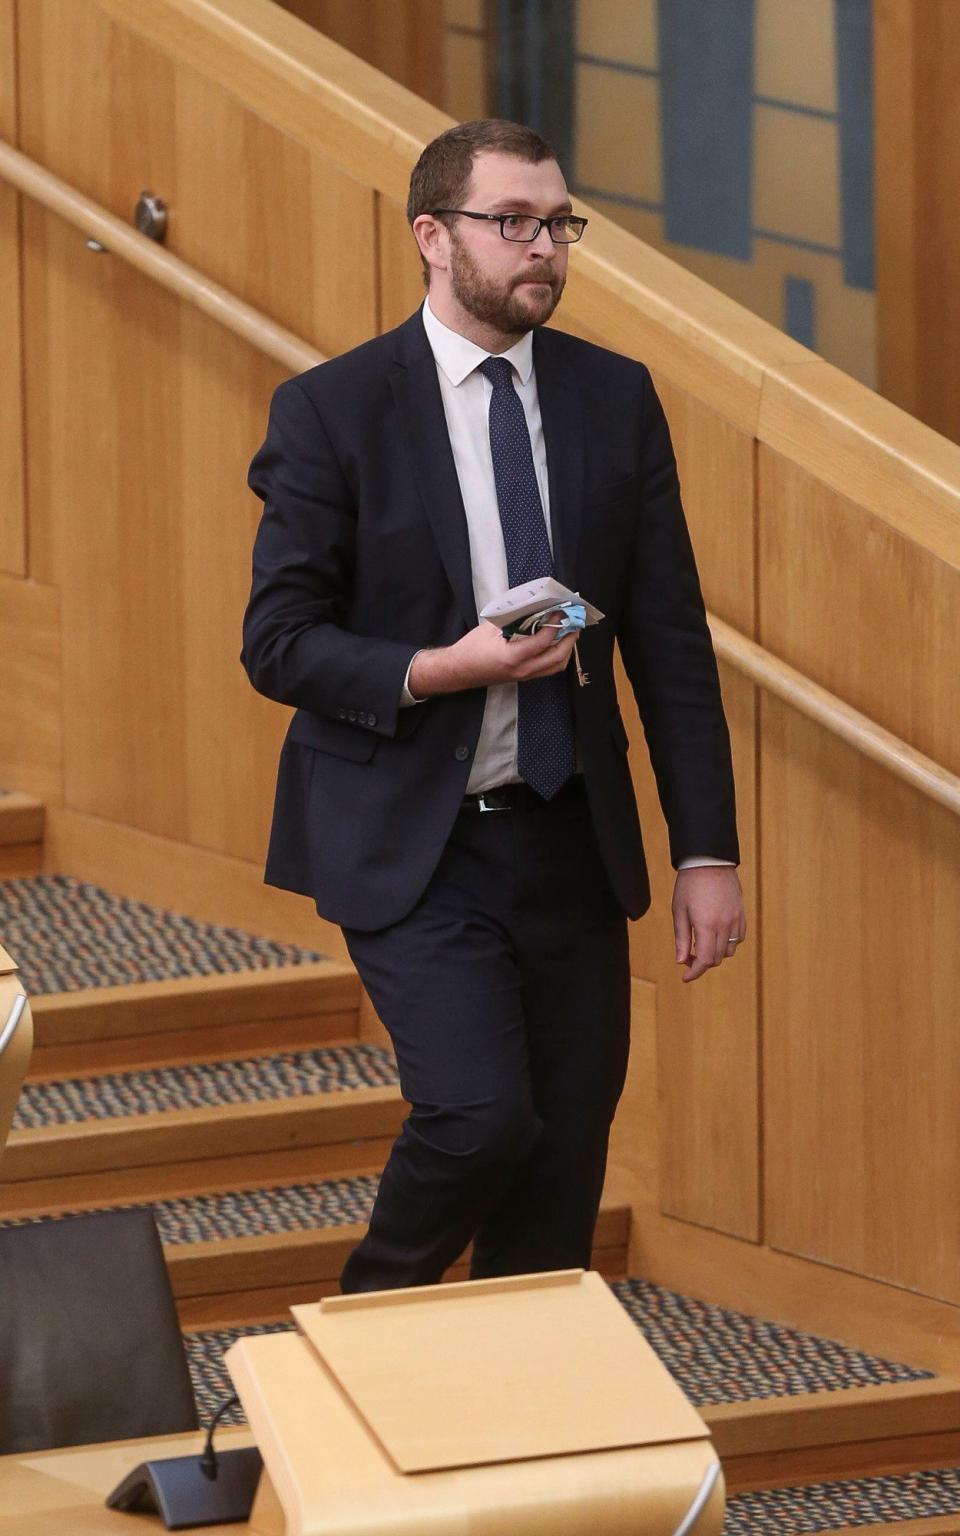 Mr Mundell leaves the chamber - Scottish Parliament/Scottish Parliament